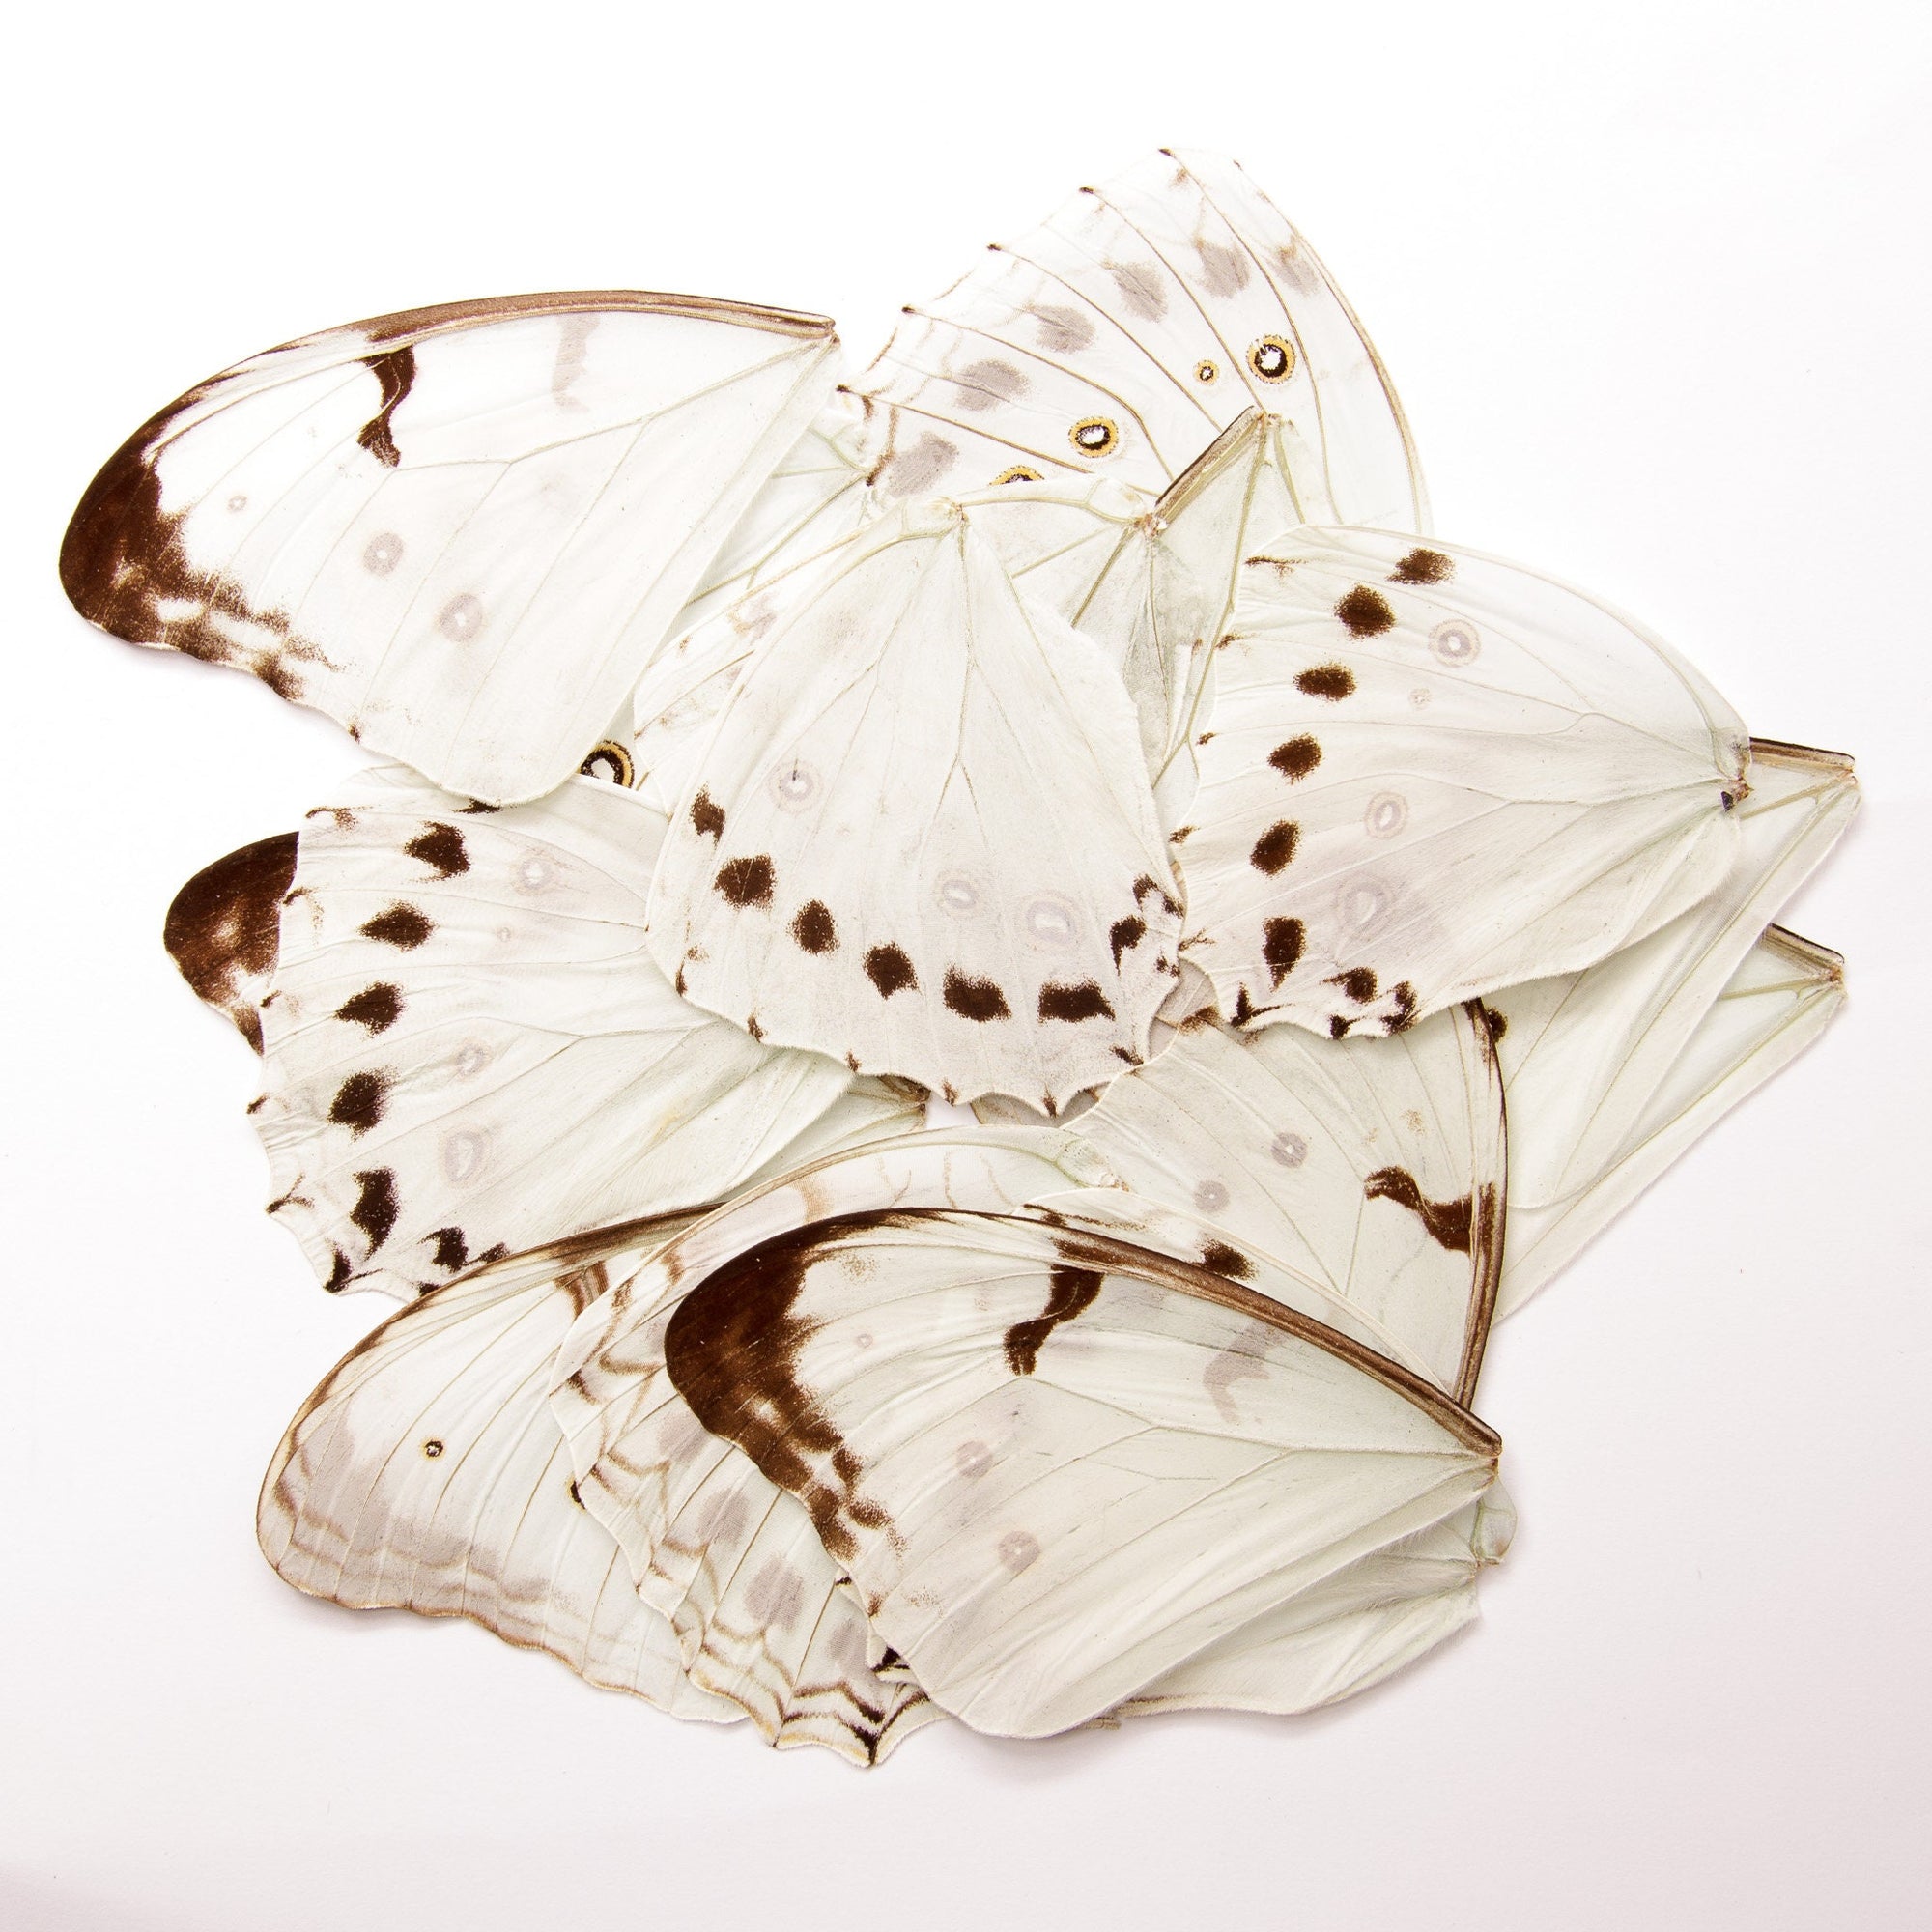 16 Butterfly Wings WHITE Luna Morpho (Morpho luna) Real Dry-preserved Specimens for Artistic Creation